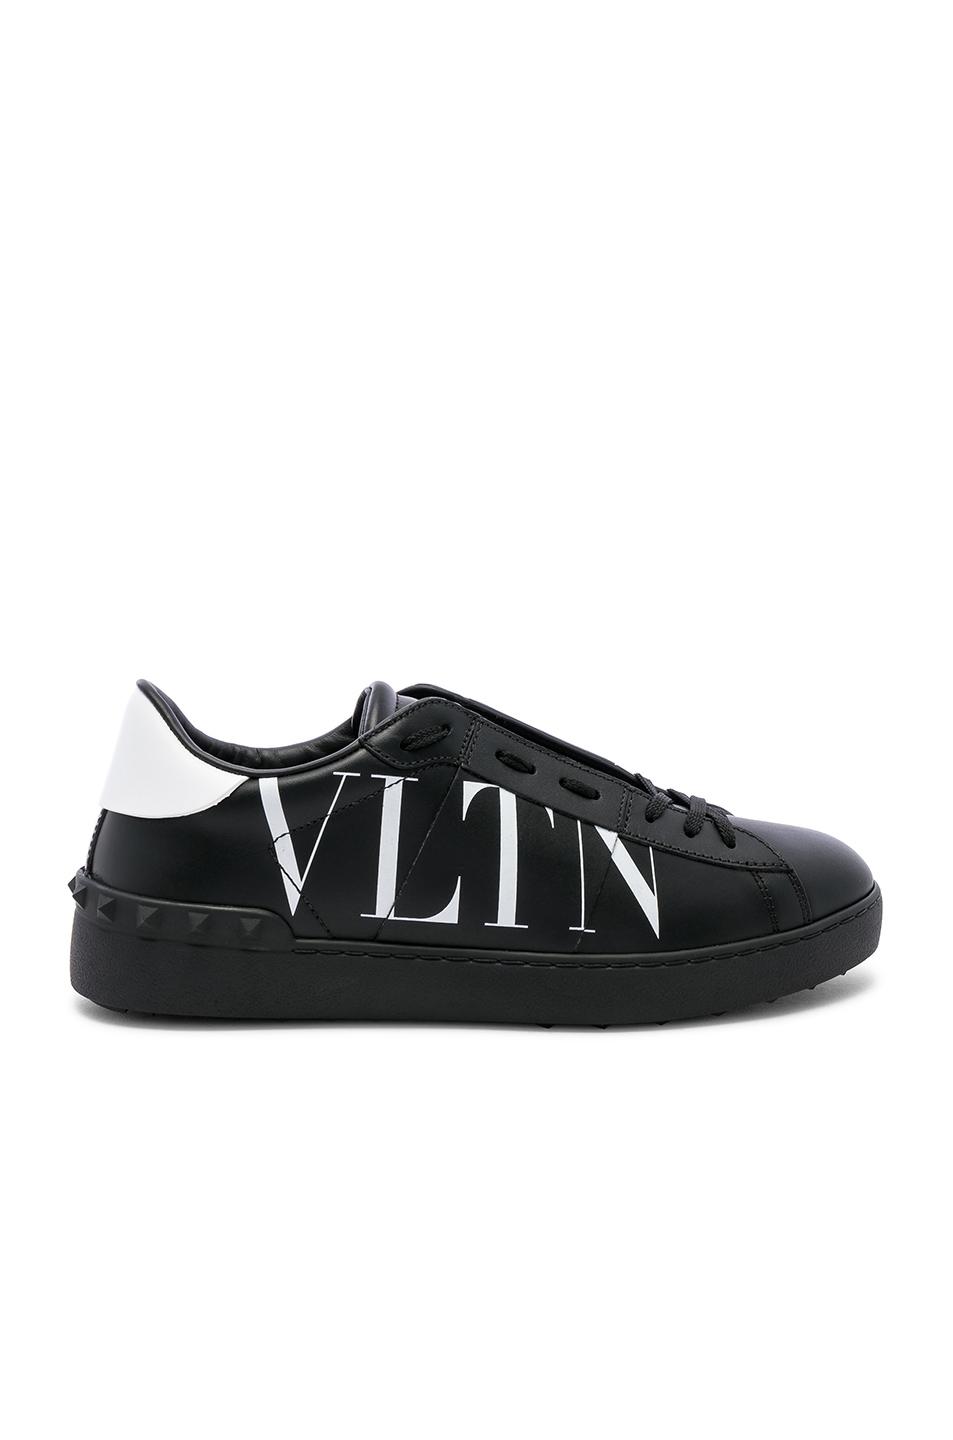 Valentino Leather Logo Sneaker in Black for Men - Lyst